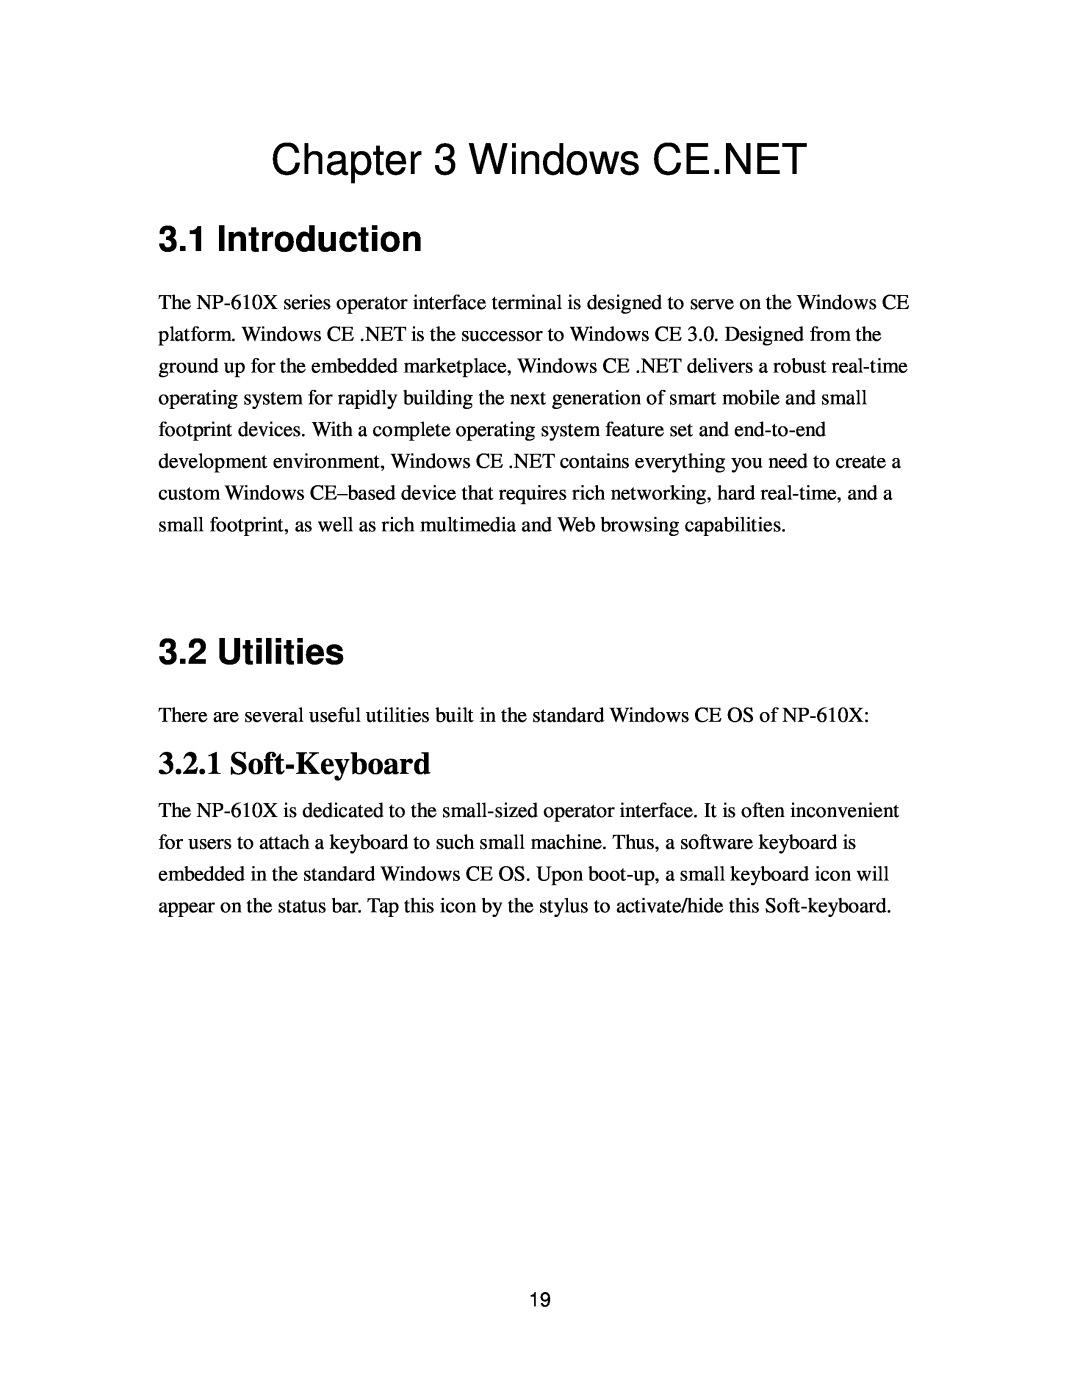 Nextar NP-610X user manual Windows CE.NET, Introduction, Utilities, Soft-Keyboard 